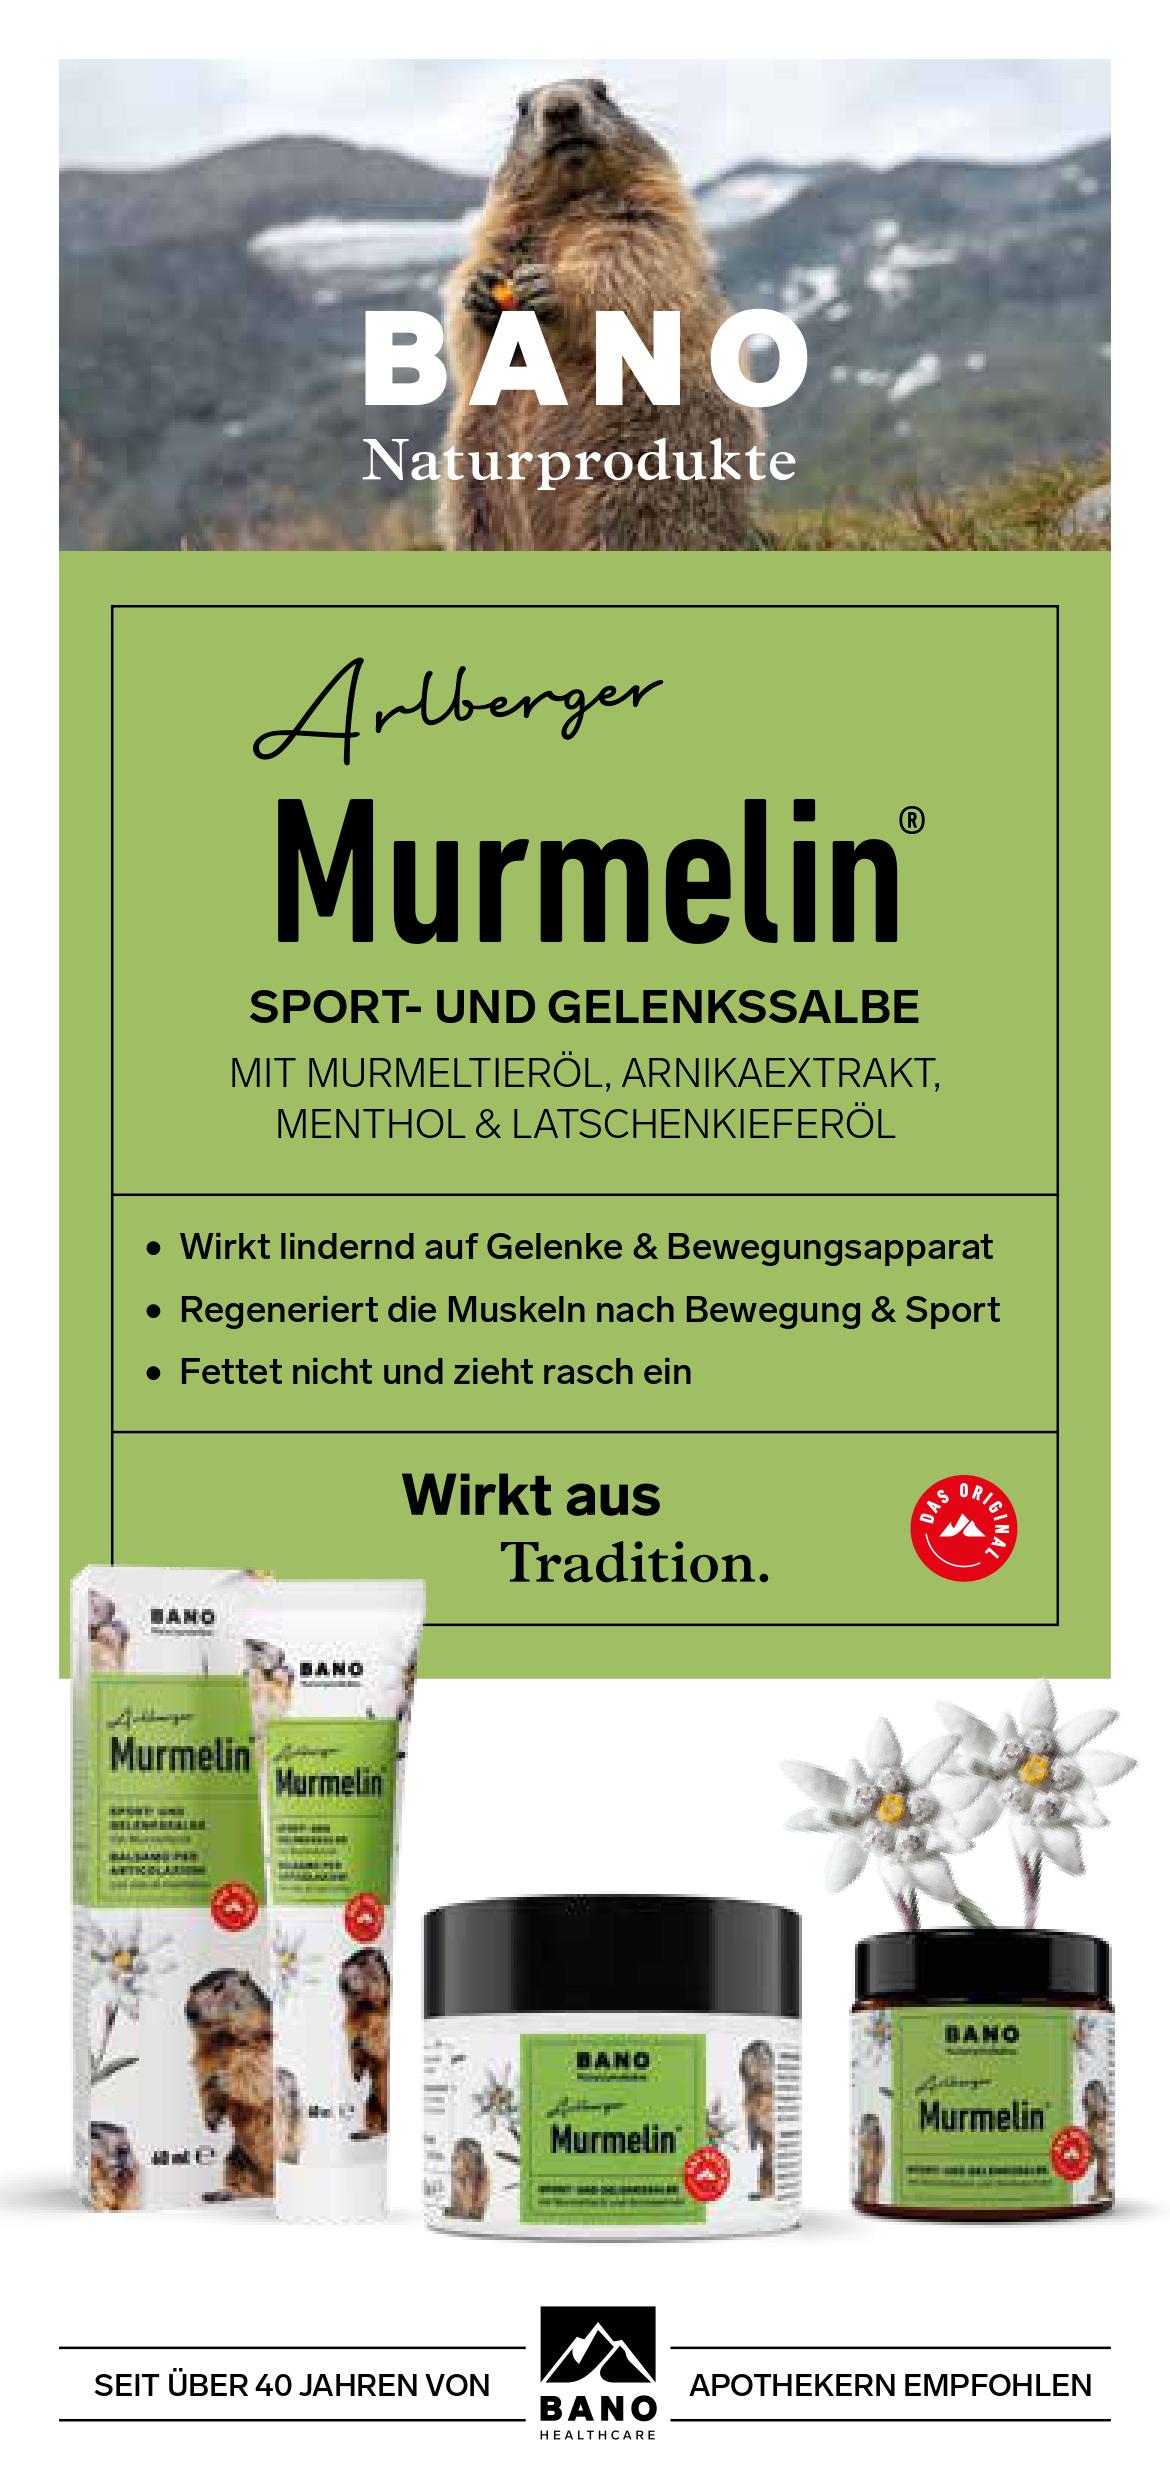 Arlberger Murmelin Sport- und Gelenkssalbe